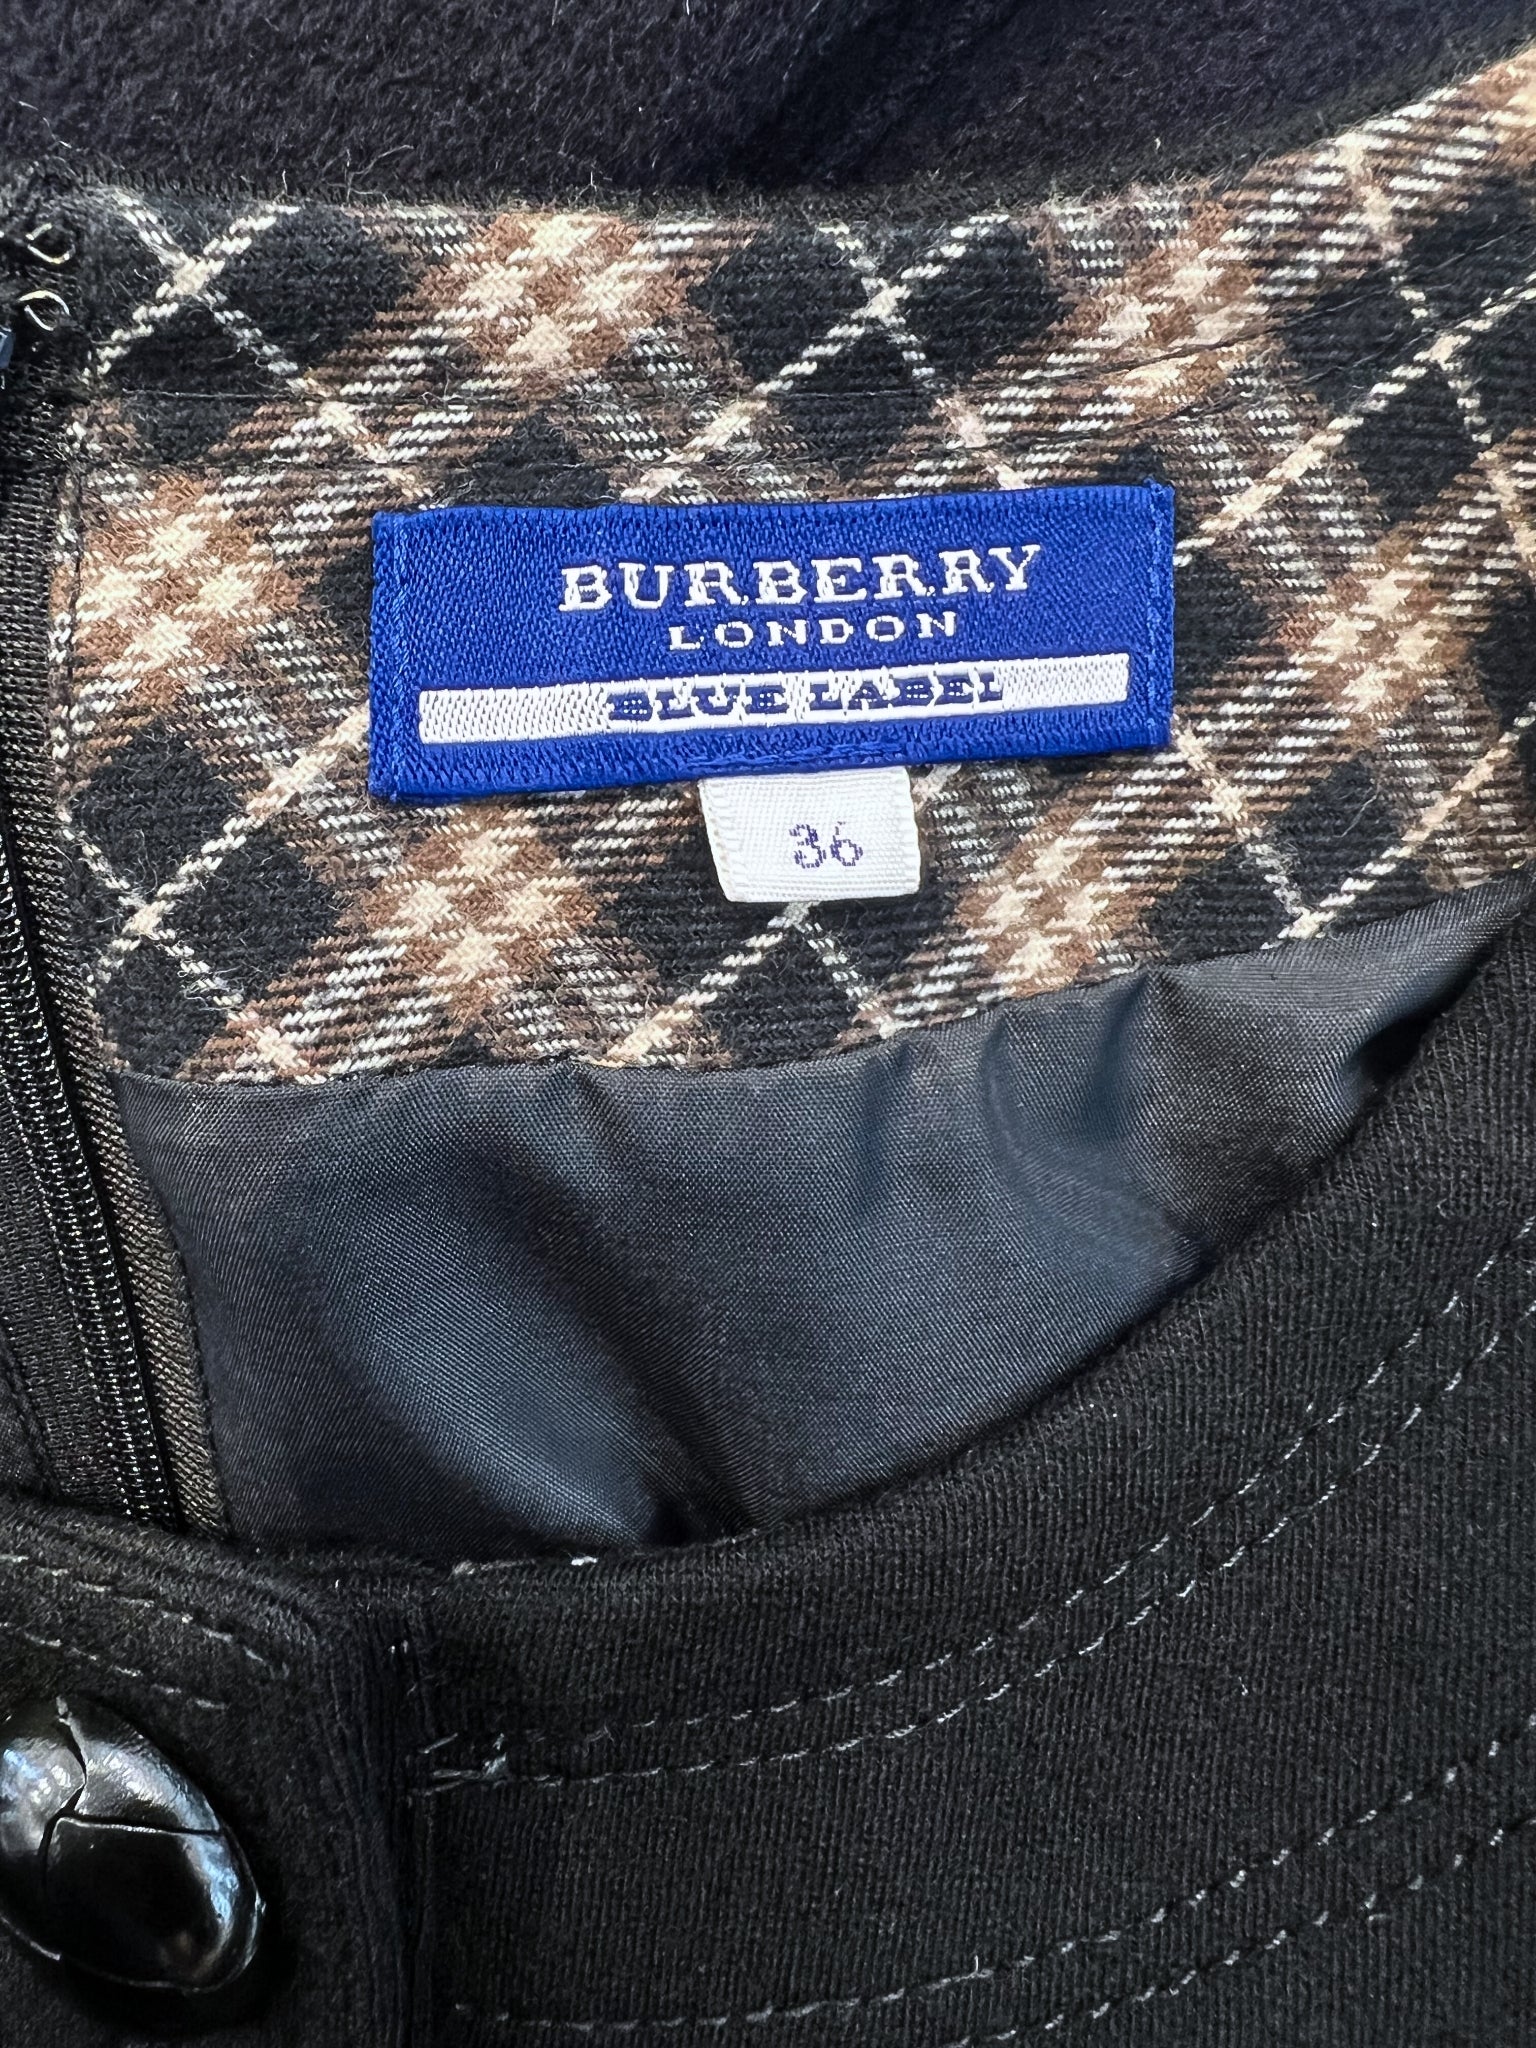 Burberry Blue Label Check Dress